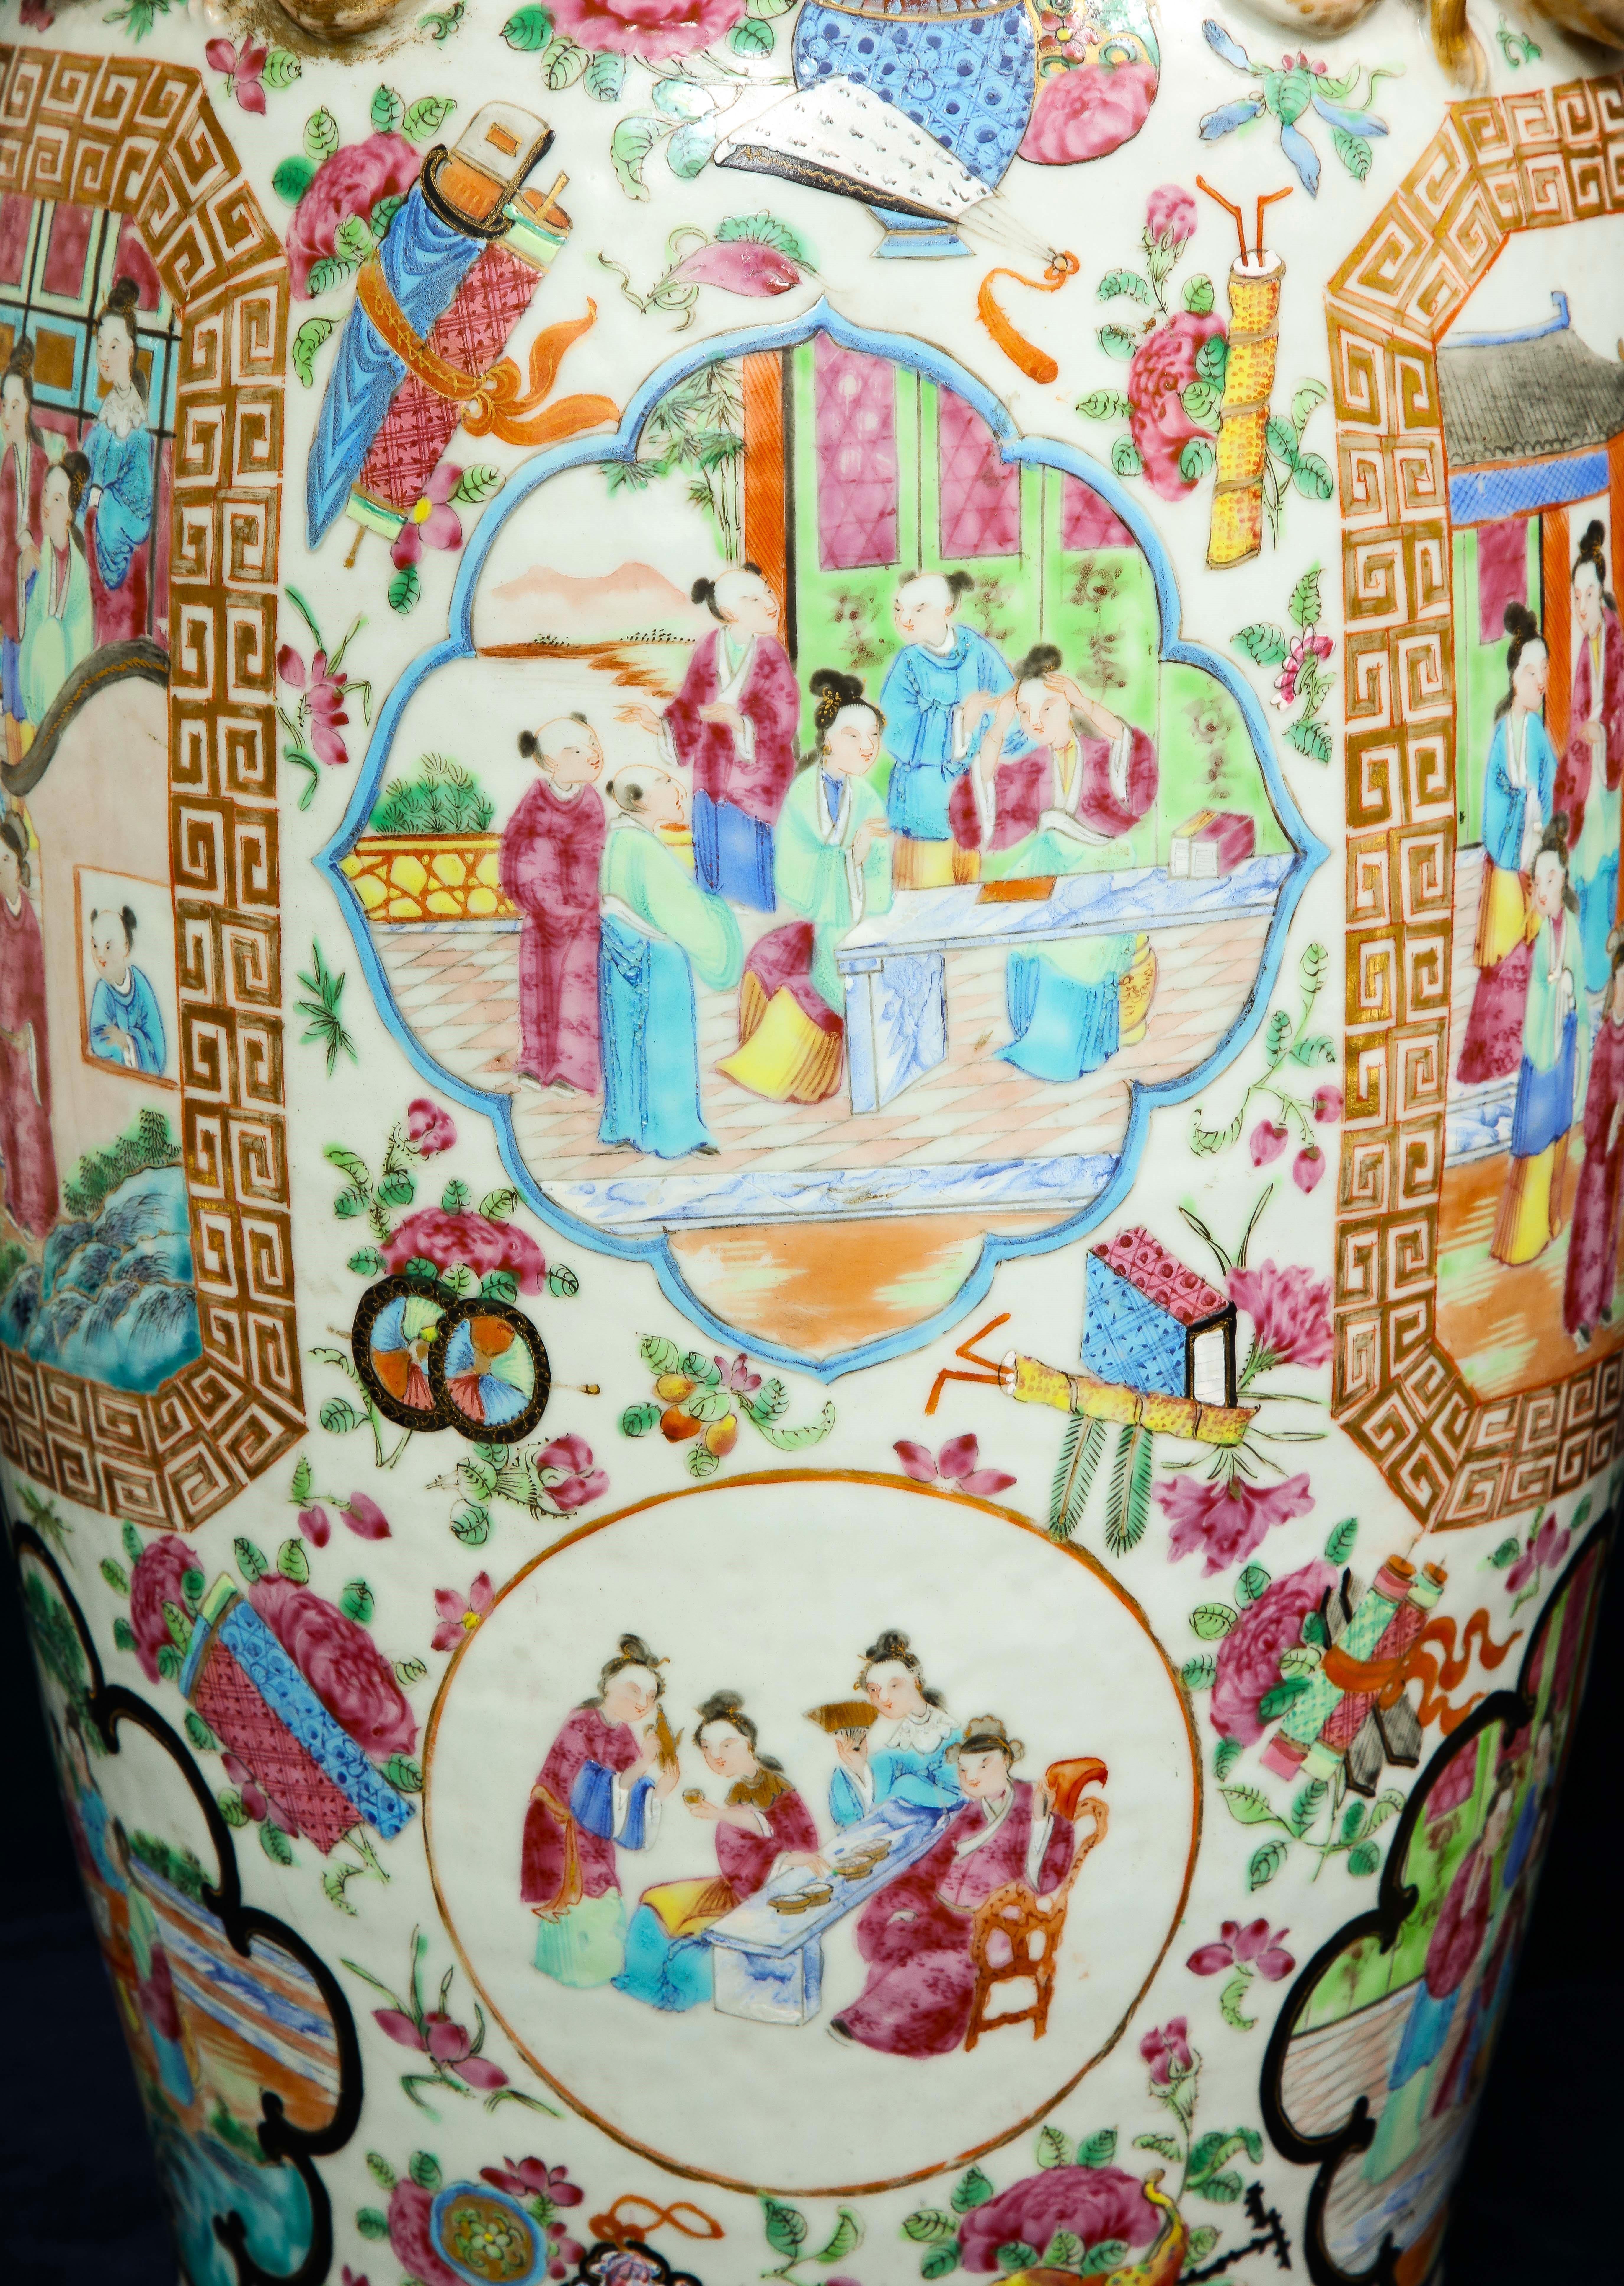 Pr. 19th Century Chinese Rose Medallion Porcelain Vases, w/ Imperial Court Scene For Sale 4